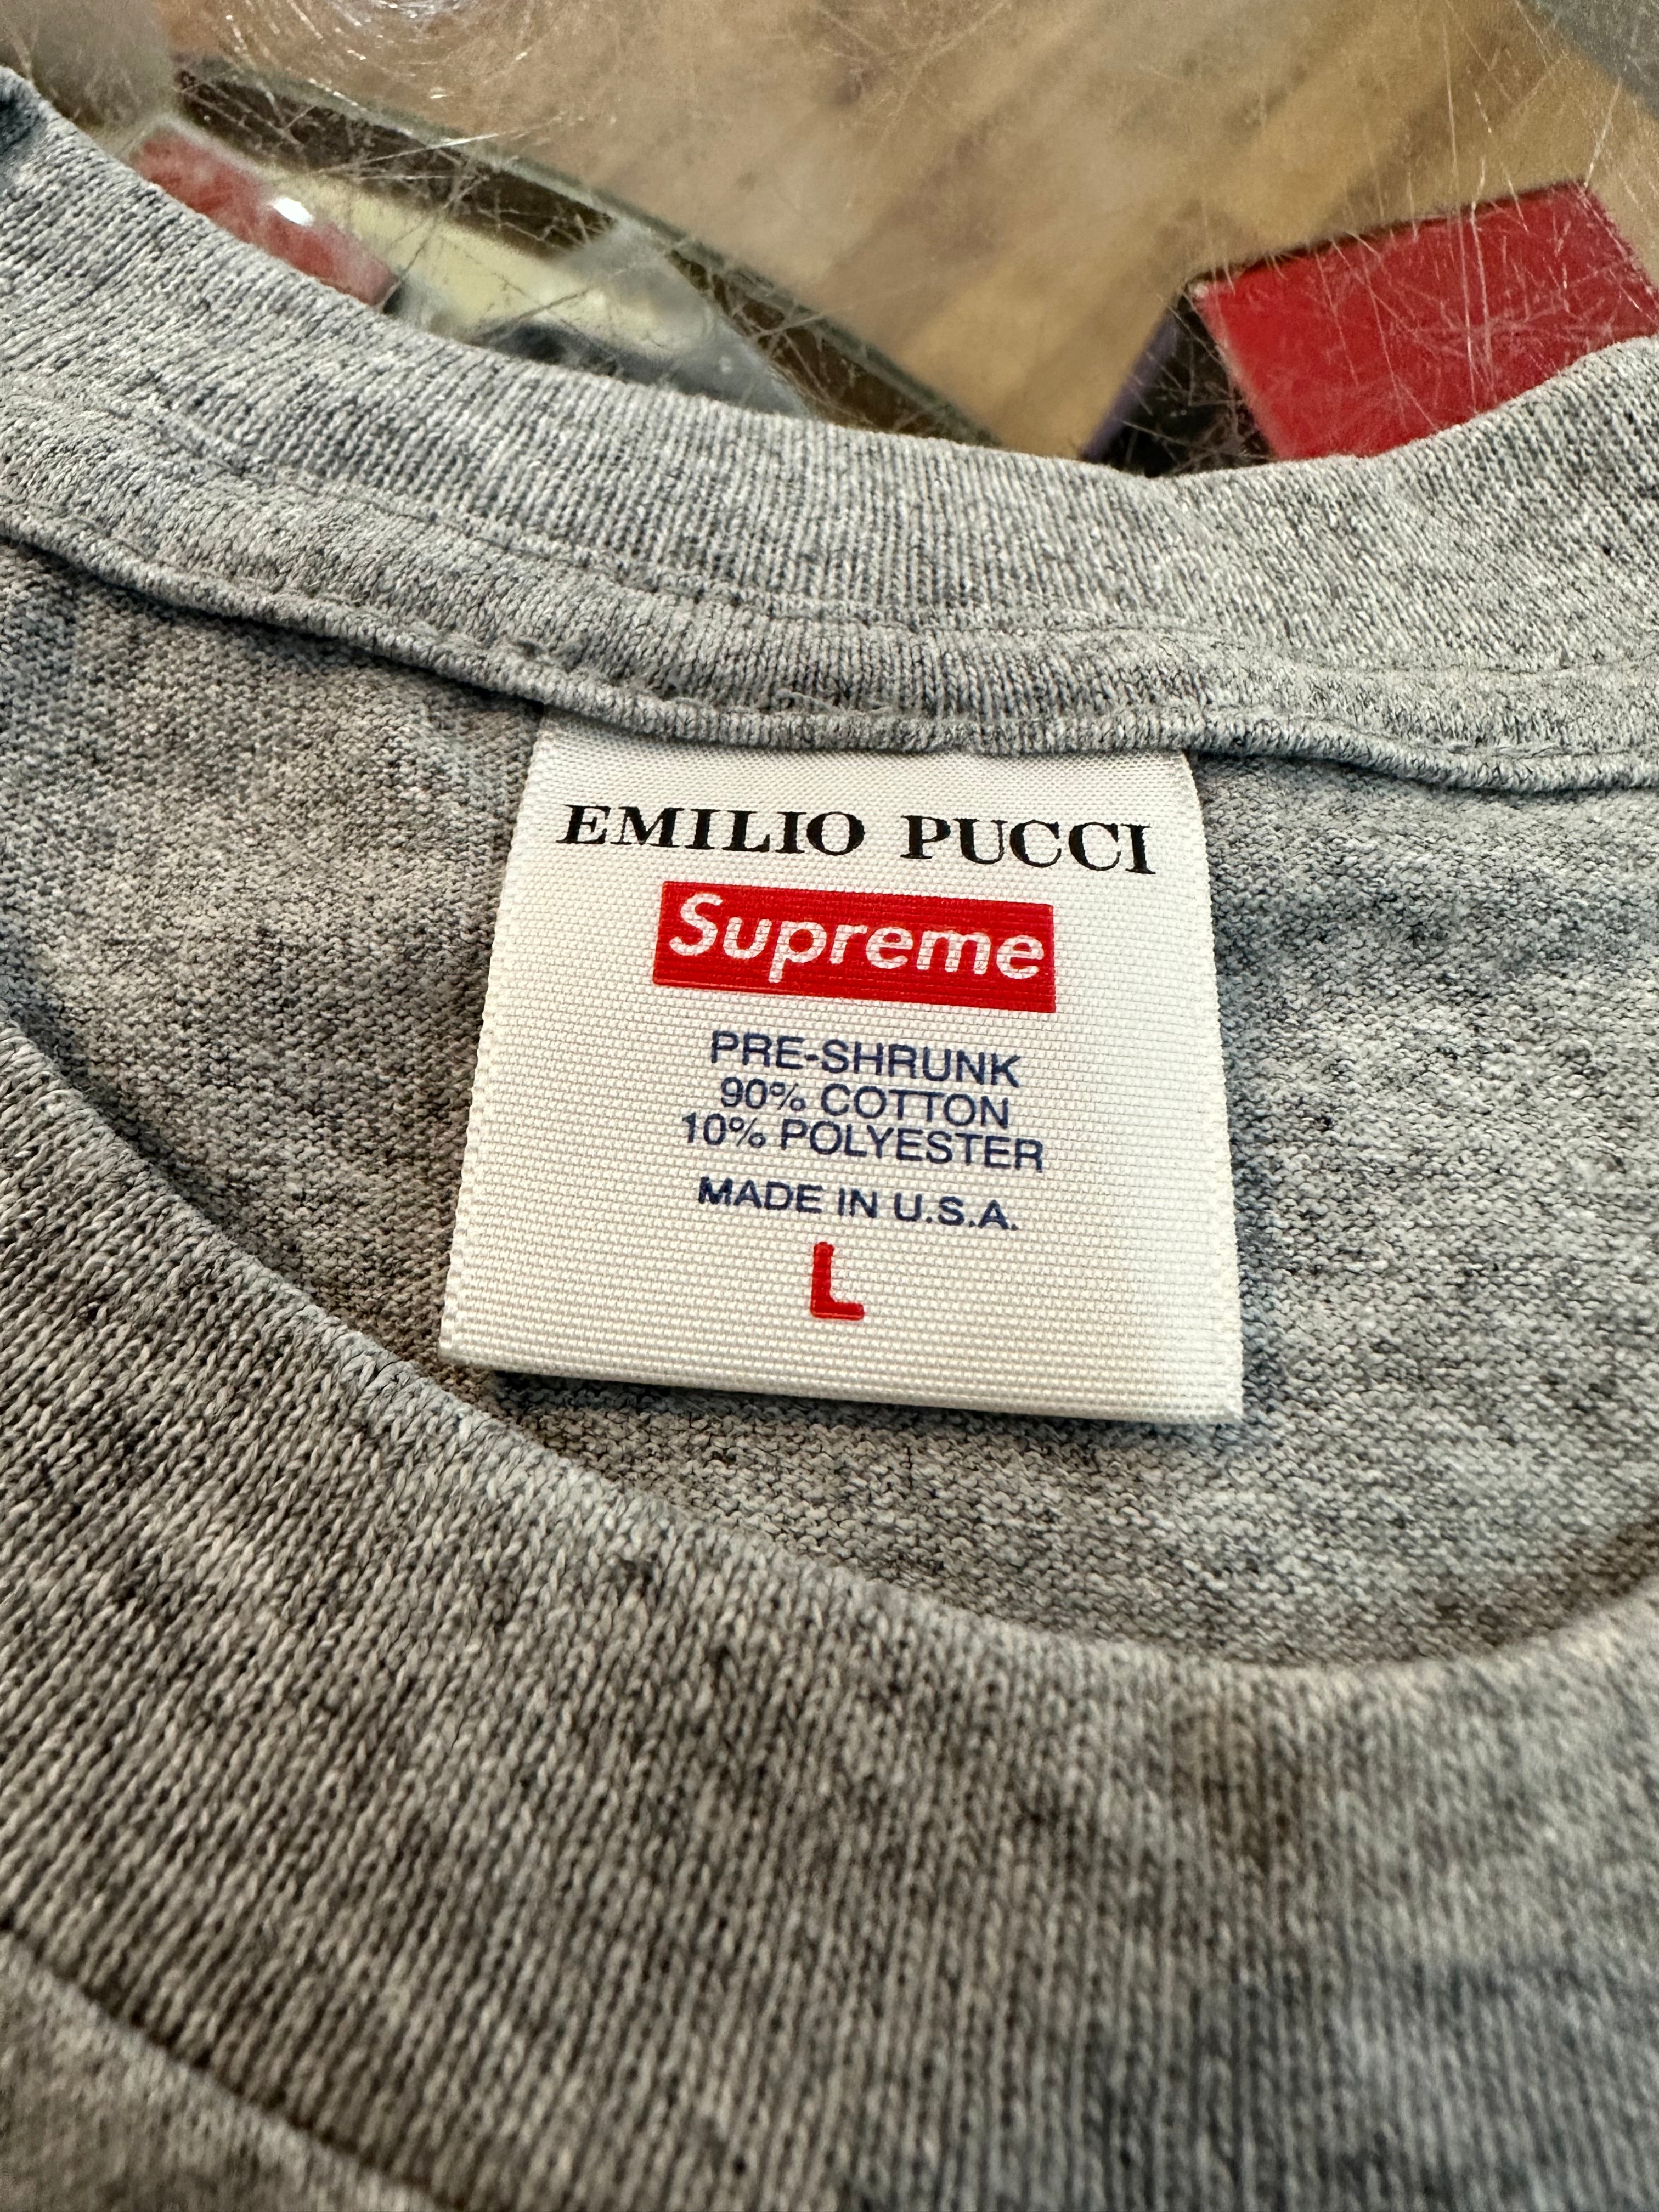 Brand new Heather Grey Supreme Emilio Pucci Box Logo Tee Size 